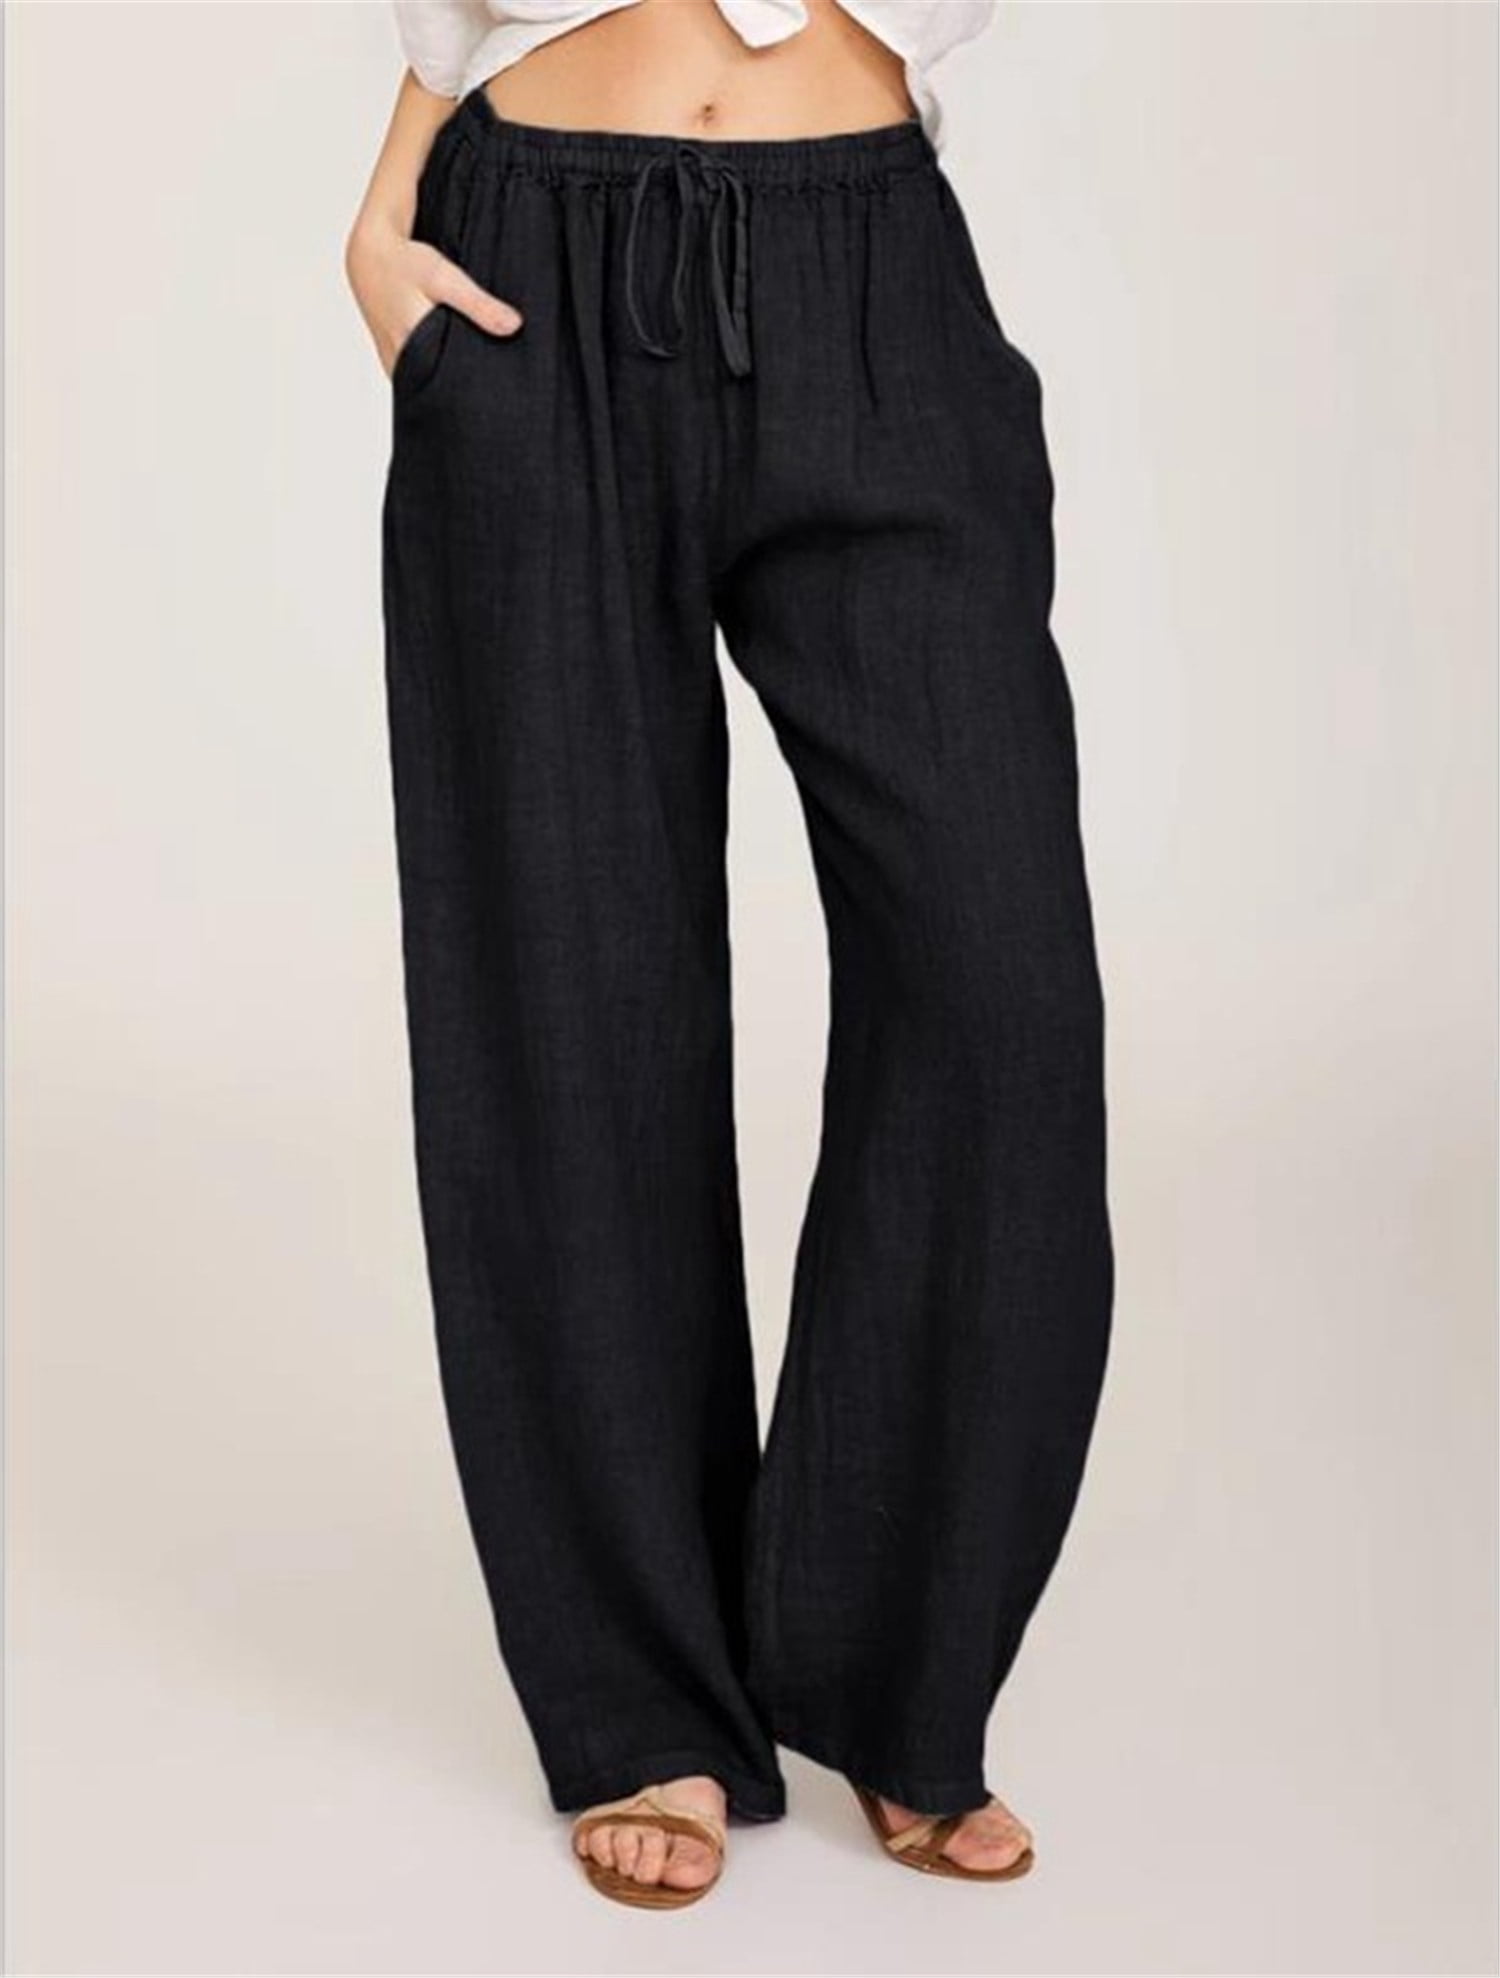 BATHRINS Womens Comfy Lounge Pants Loose Yoga Pants Drawstring Soft Pajama Pants with Pockets 